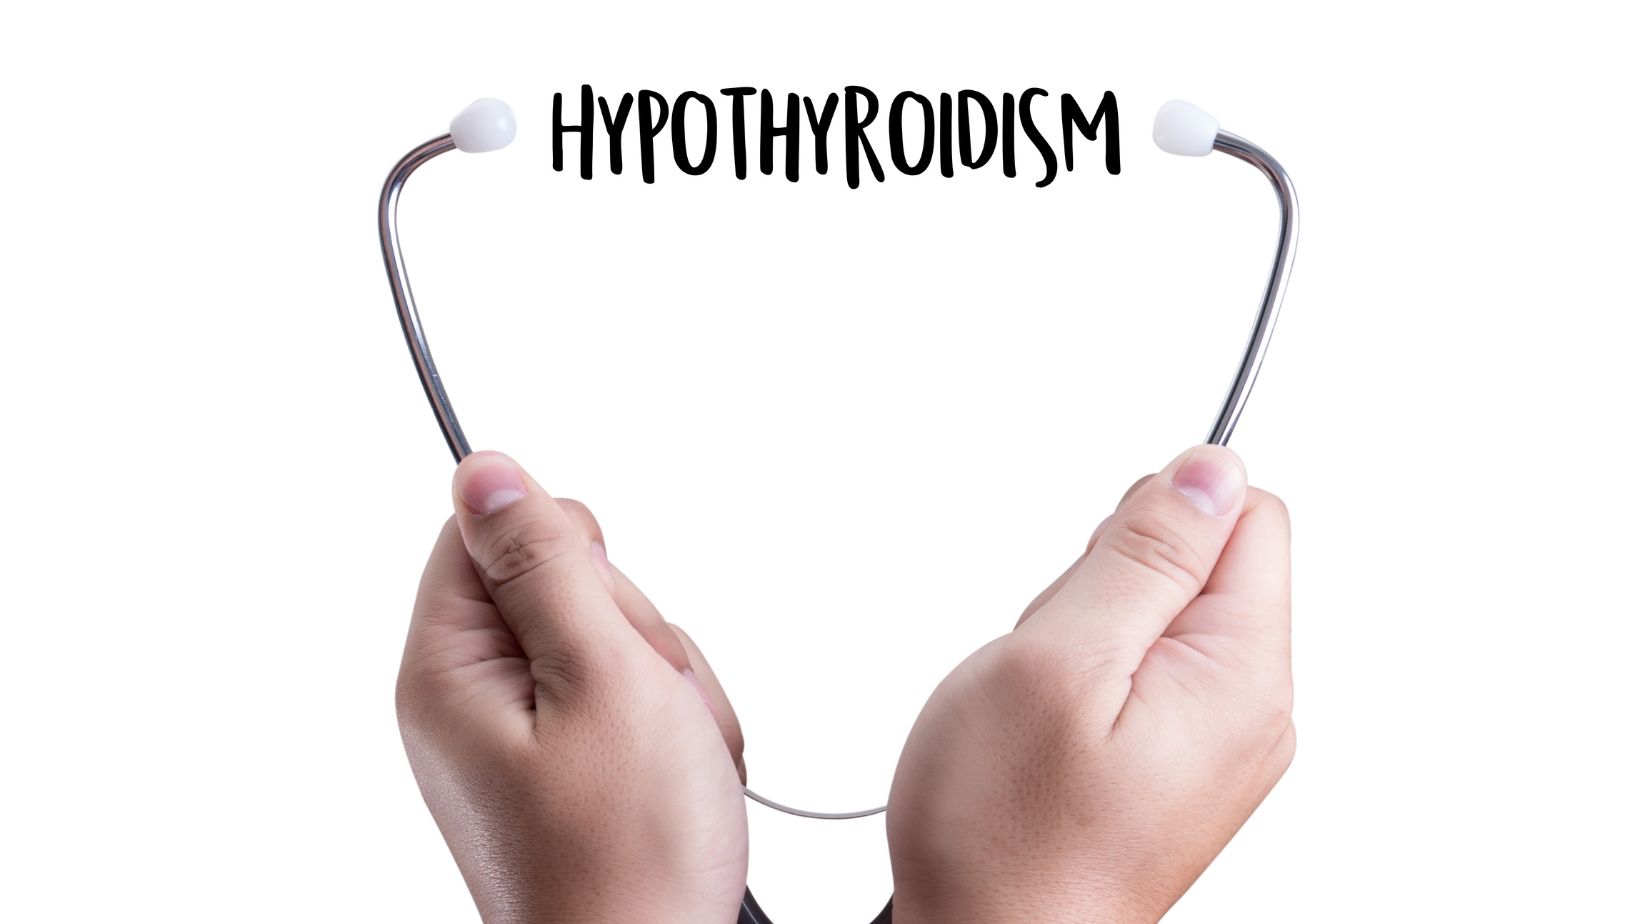 keto for hypothyroidism